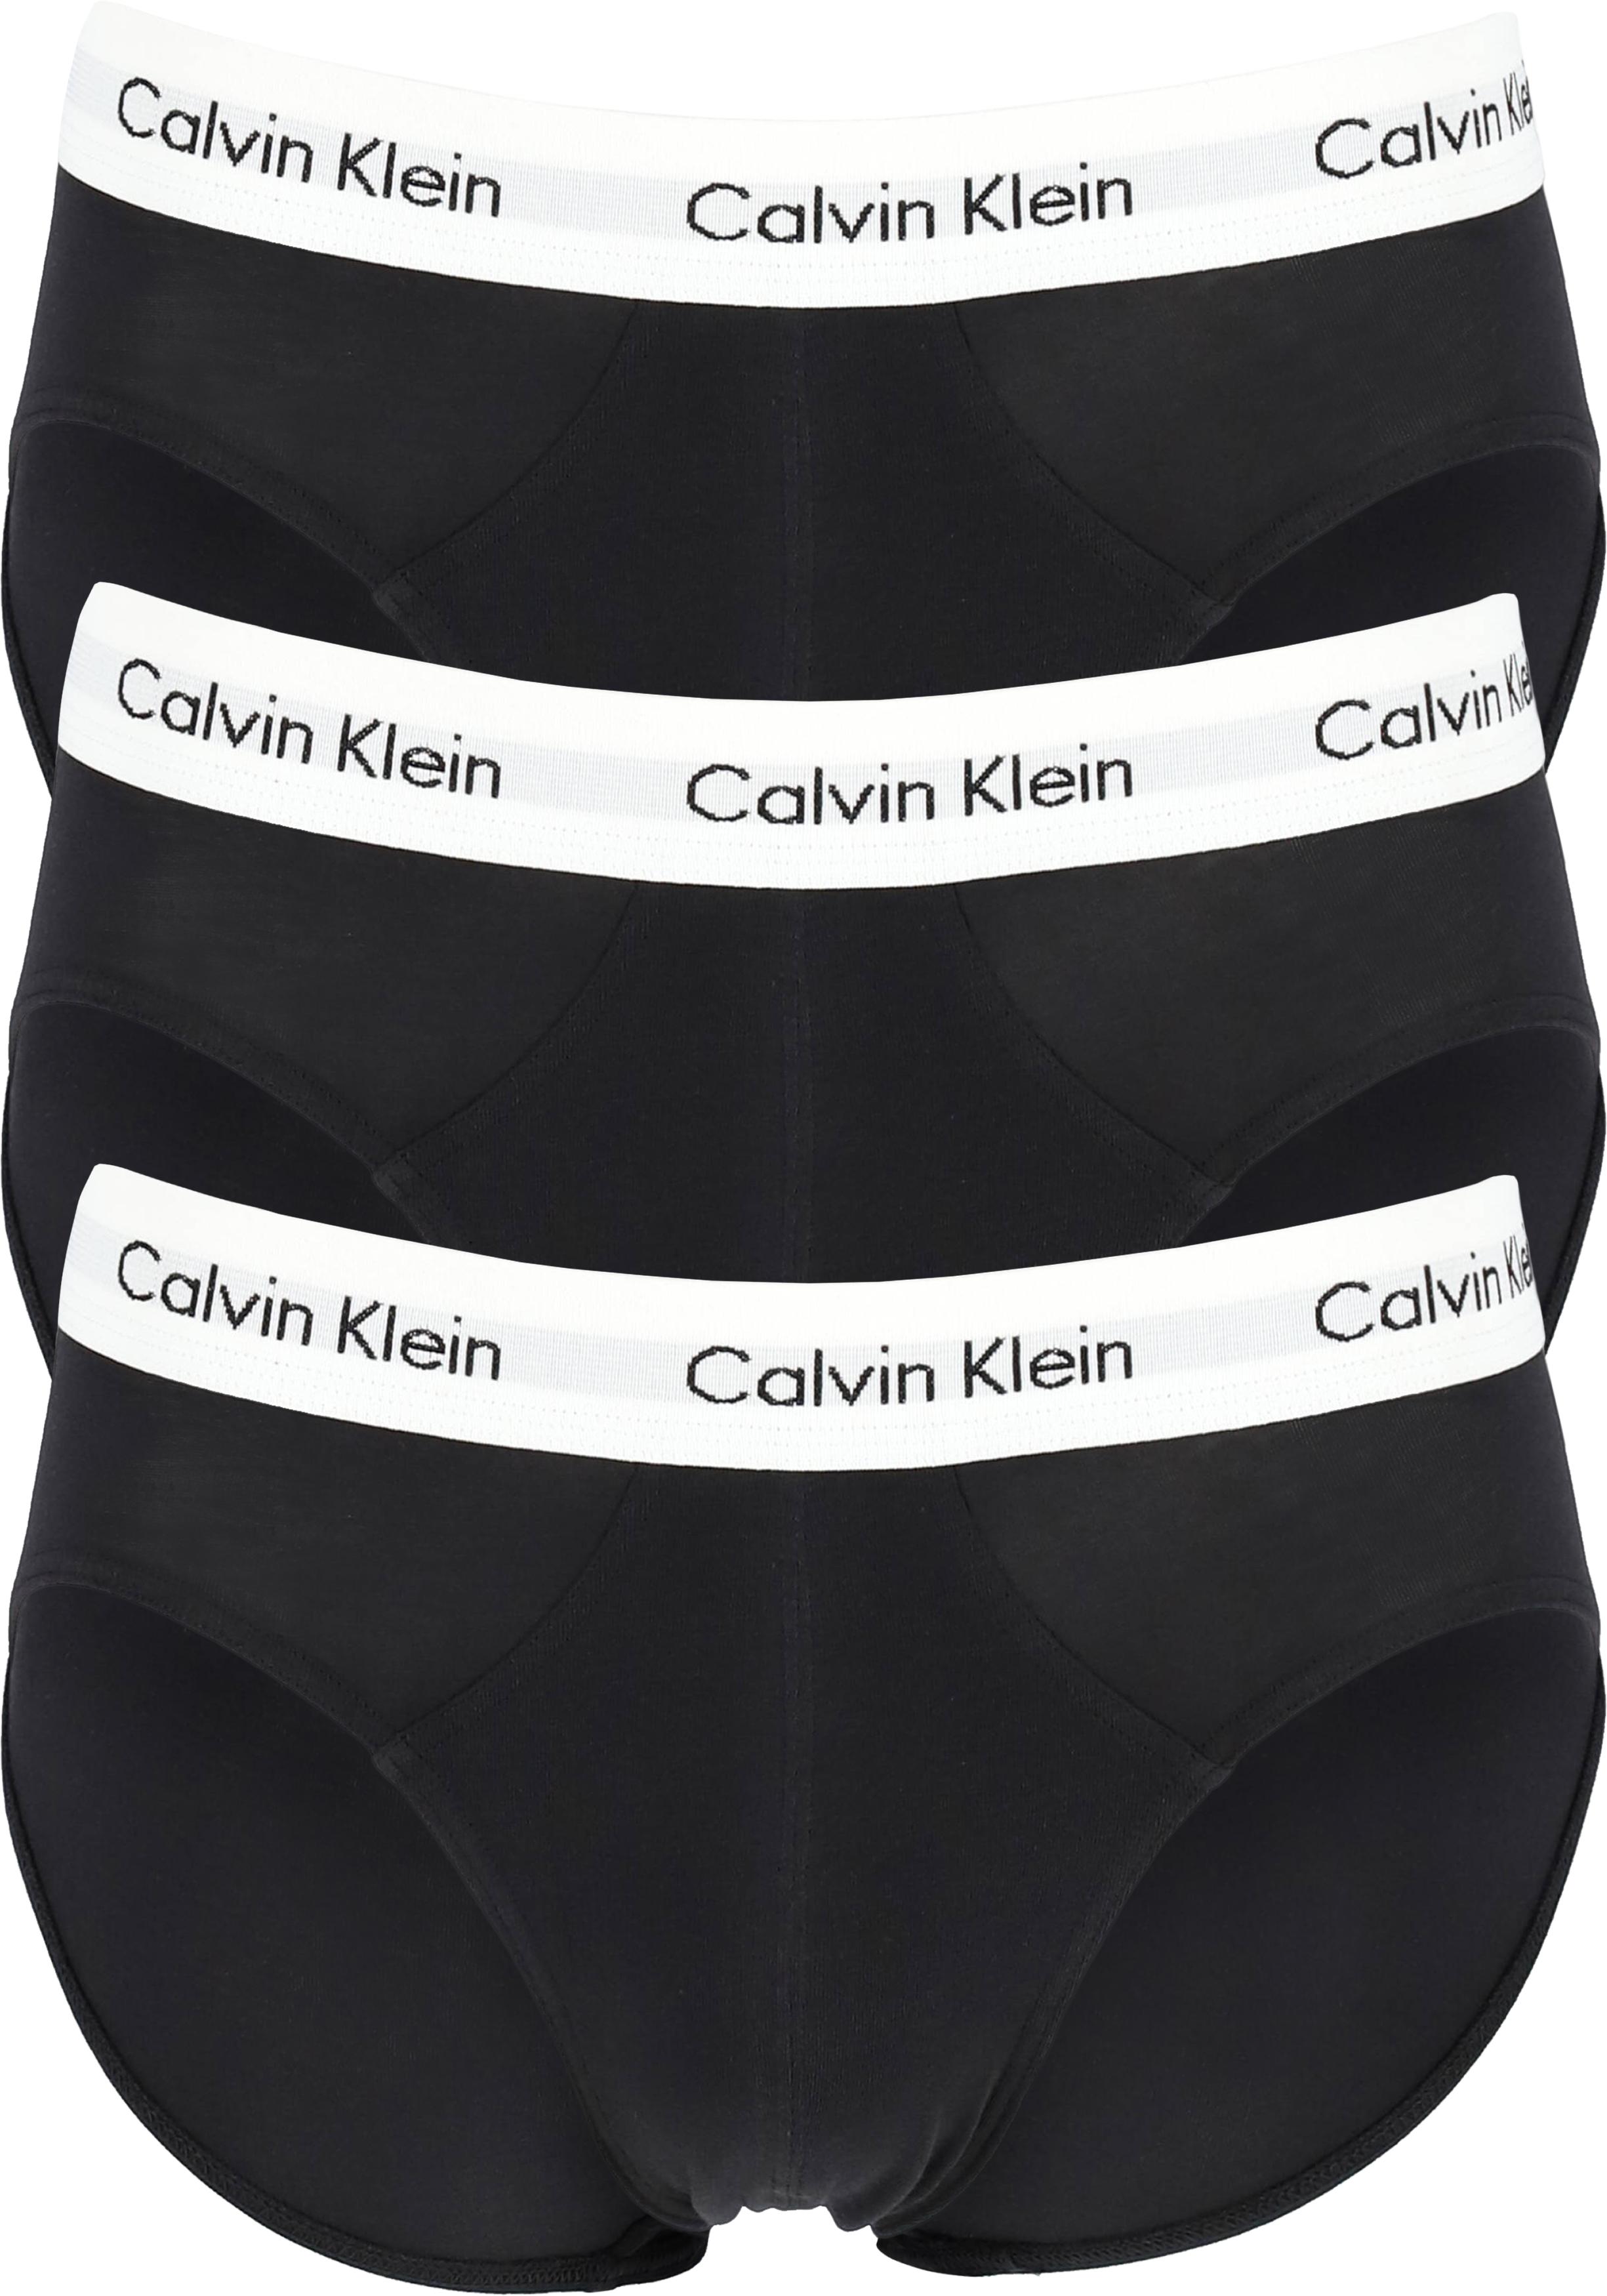 Calvin Klein hipster brief (3-pack), heren slips, zwart met witte band Zomer SALE tot 70%